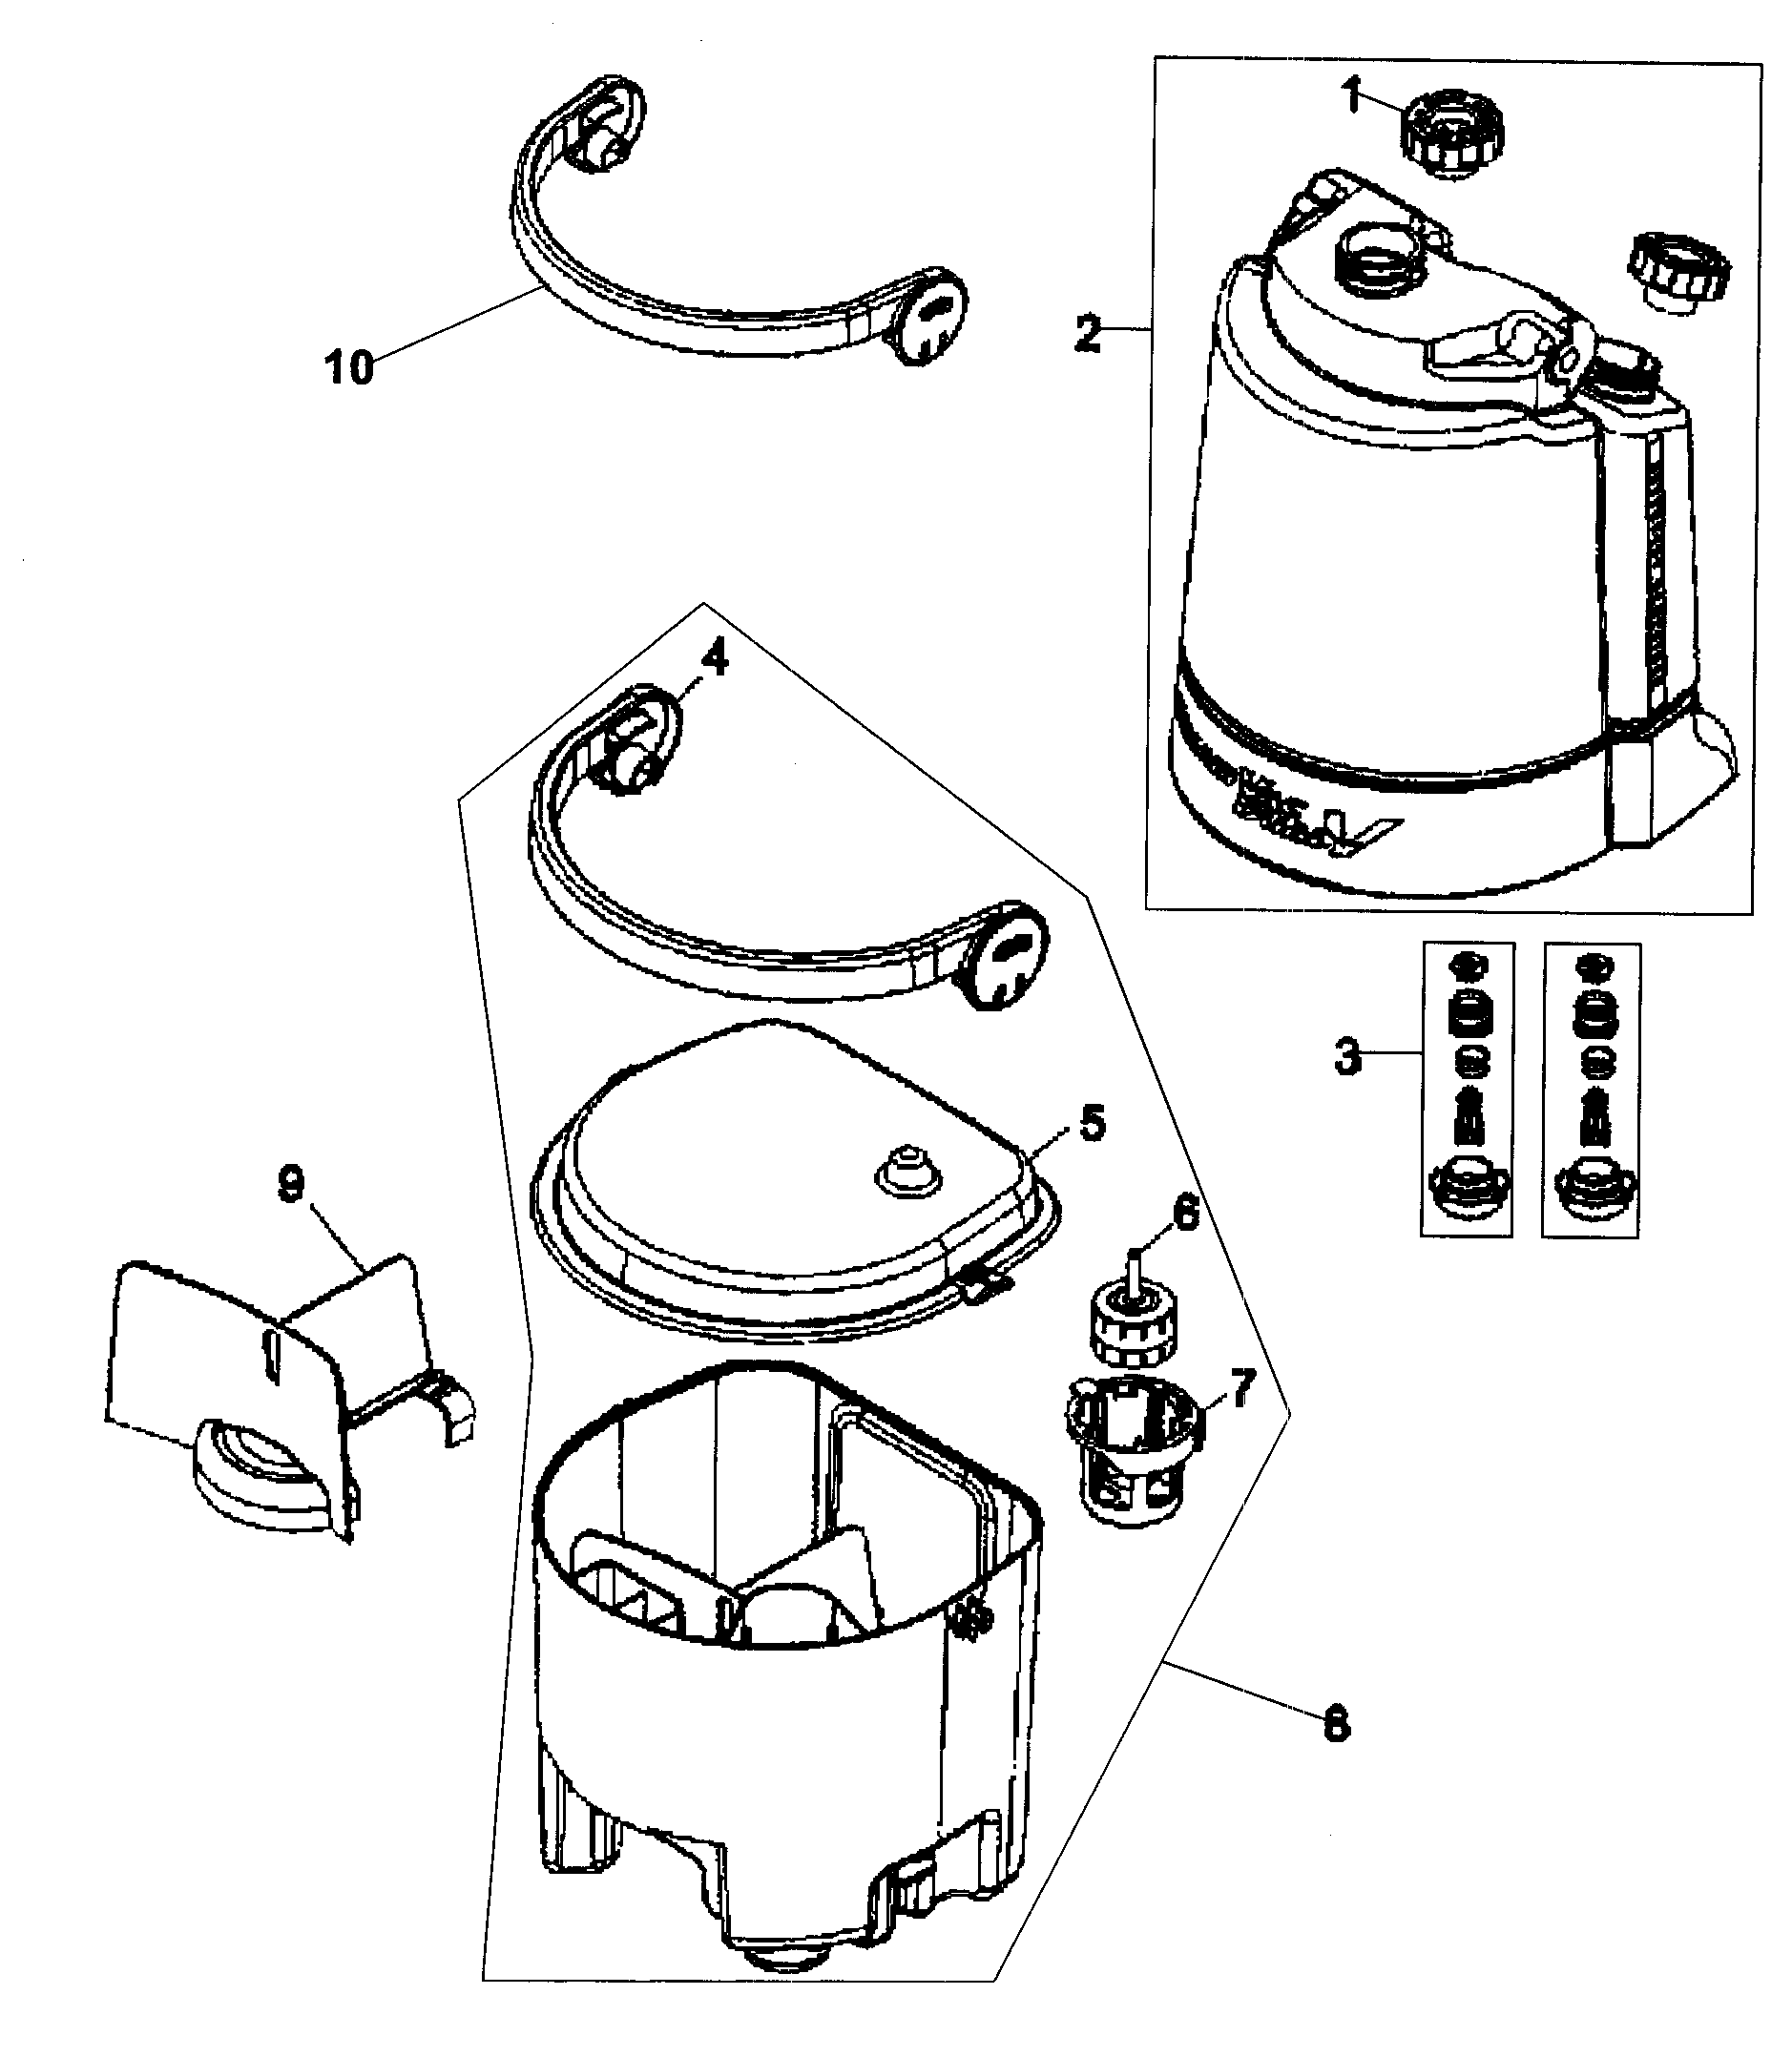 29 Hoover Steamvac Parts Diagram - Wiring Diagram List